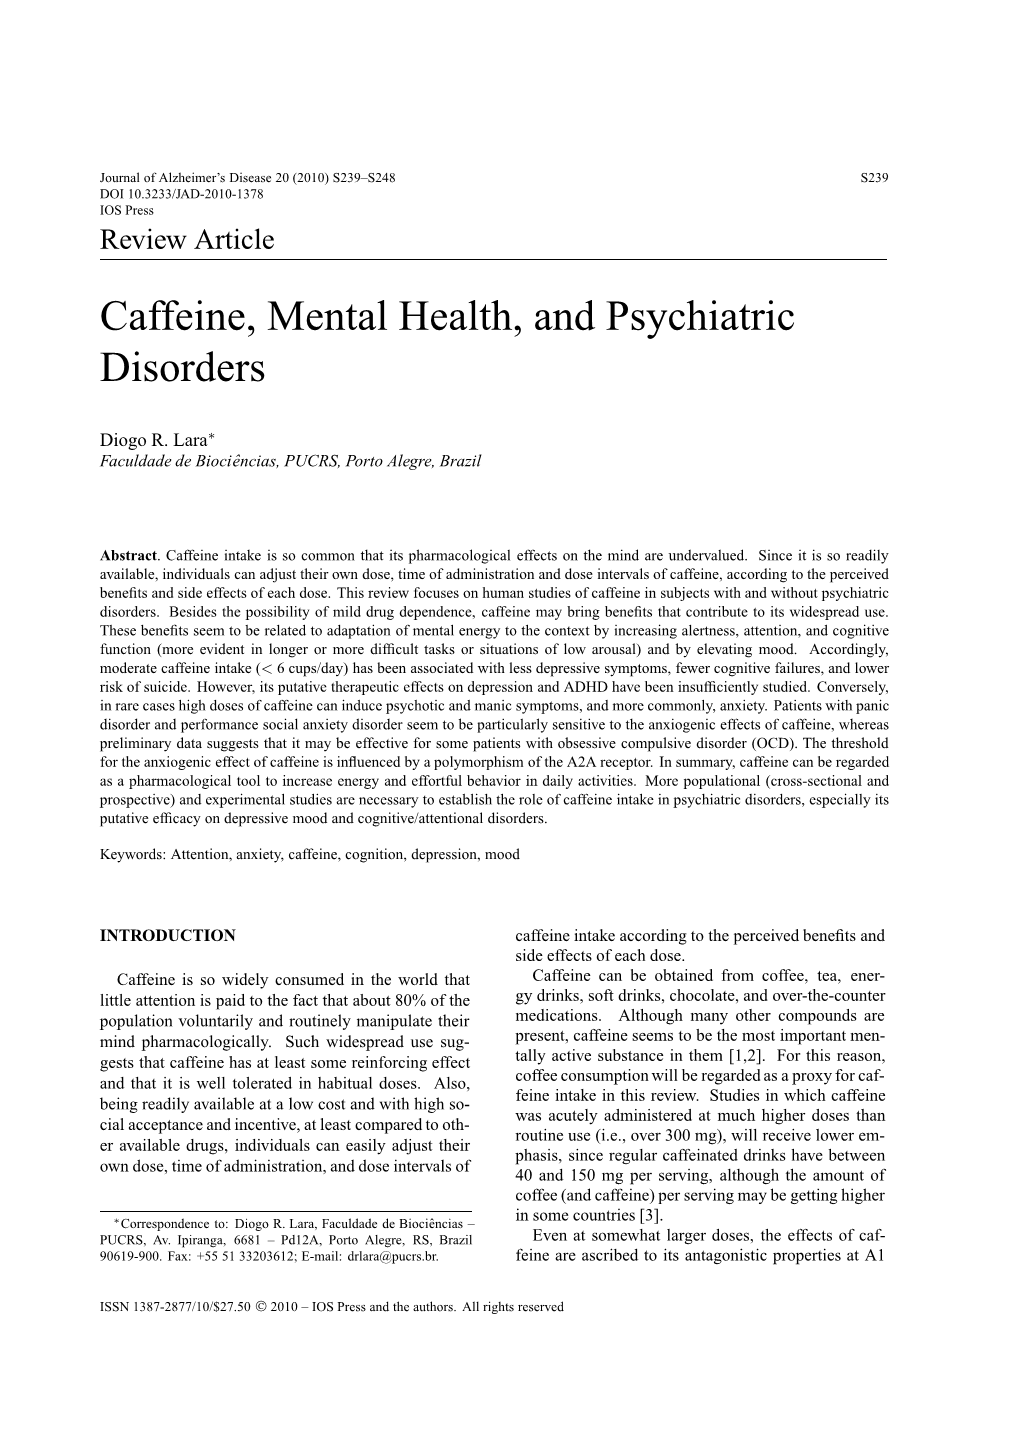 Caffeine, Mental Health, and Psychiatric Disorders